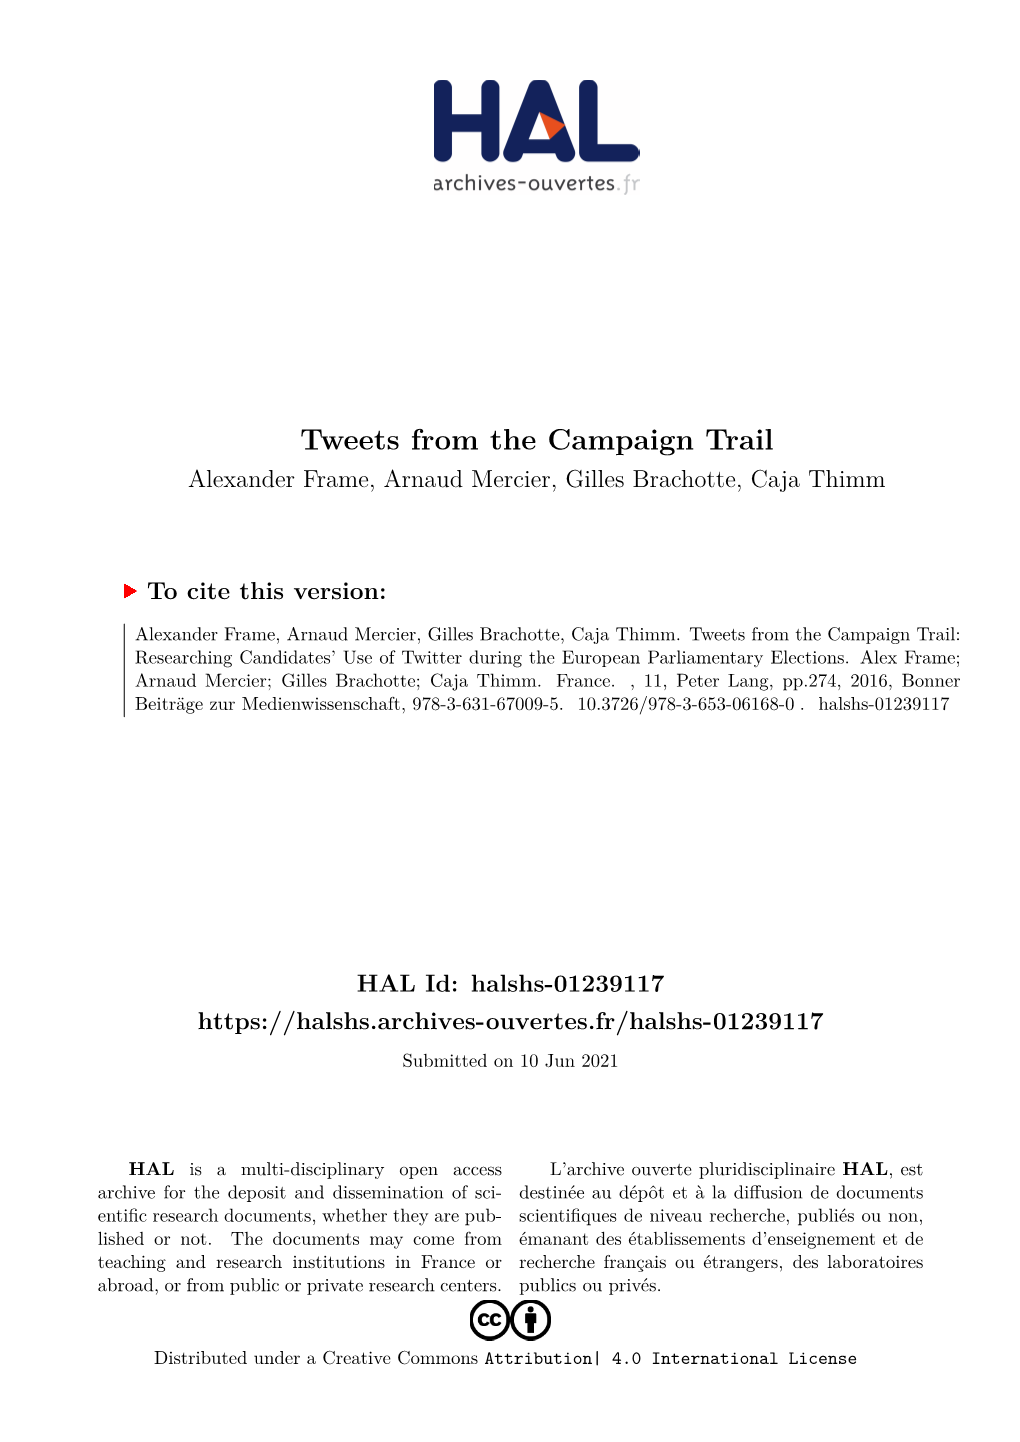 Tweets from the Campaign Trail Alexander Frame, Arnaud Mercier, Gilles Brachotte, Caja Thimm